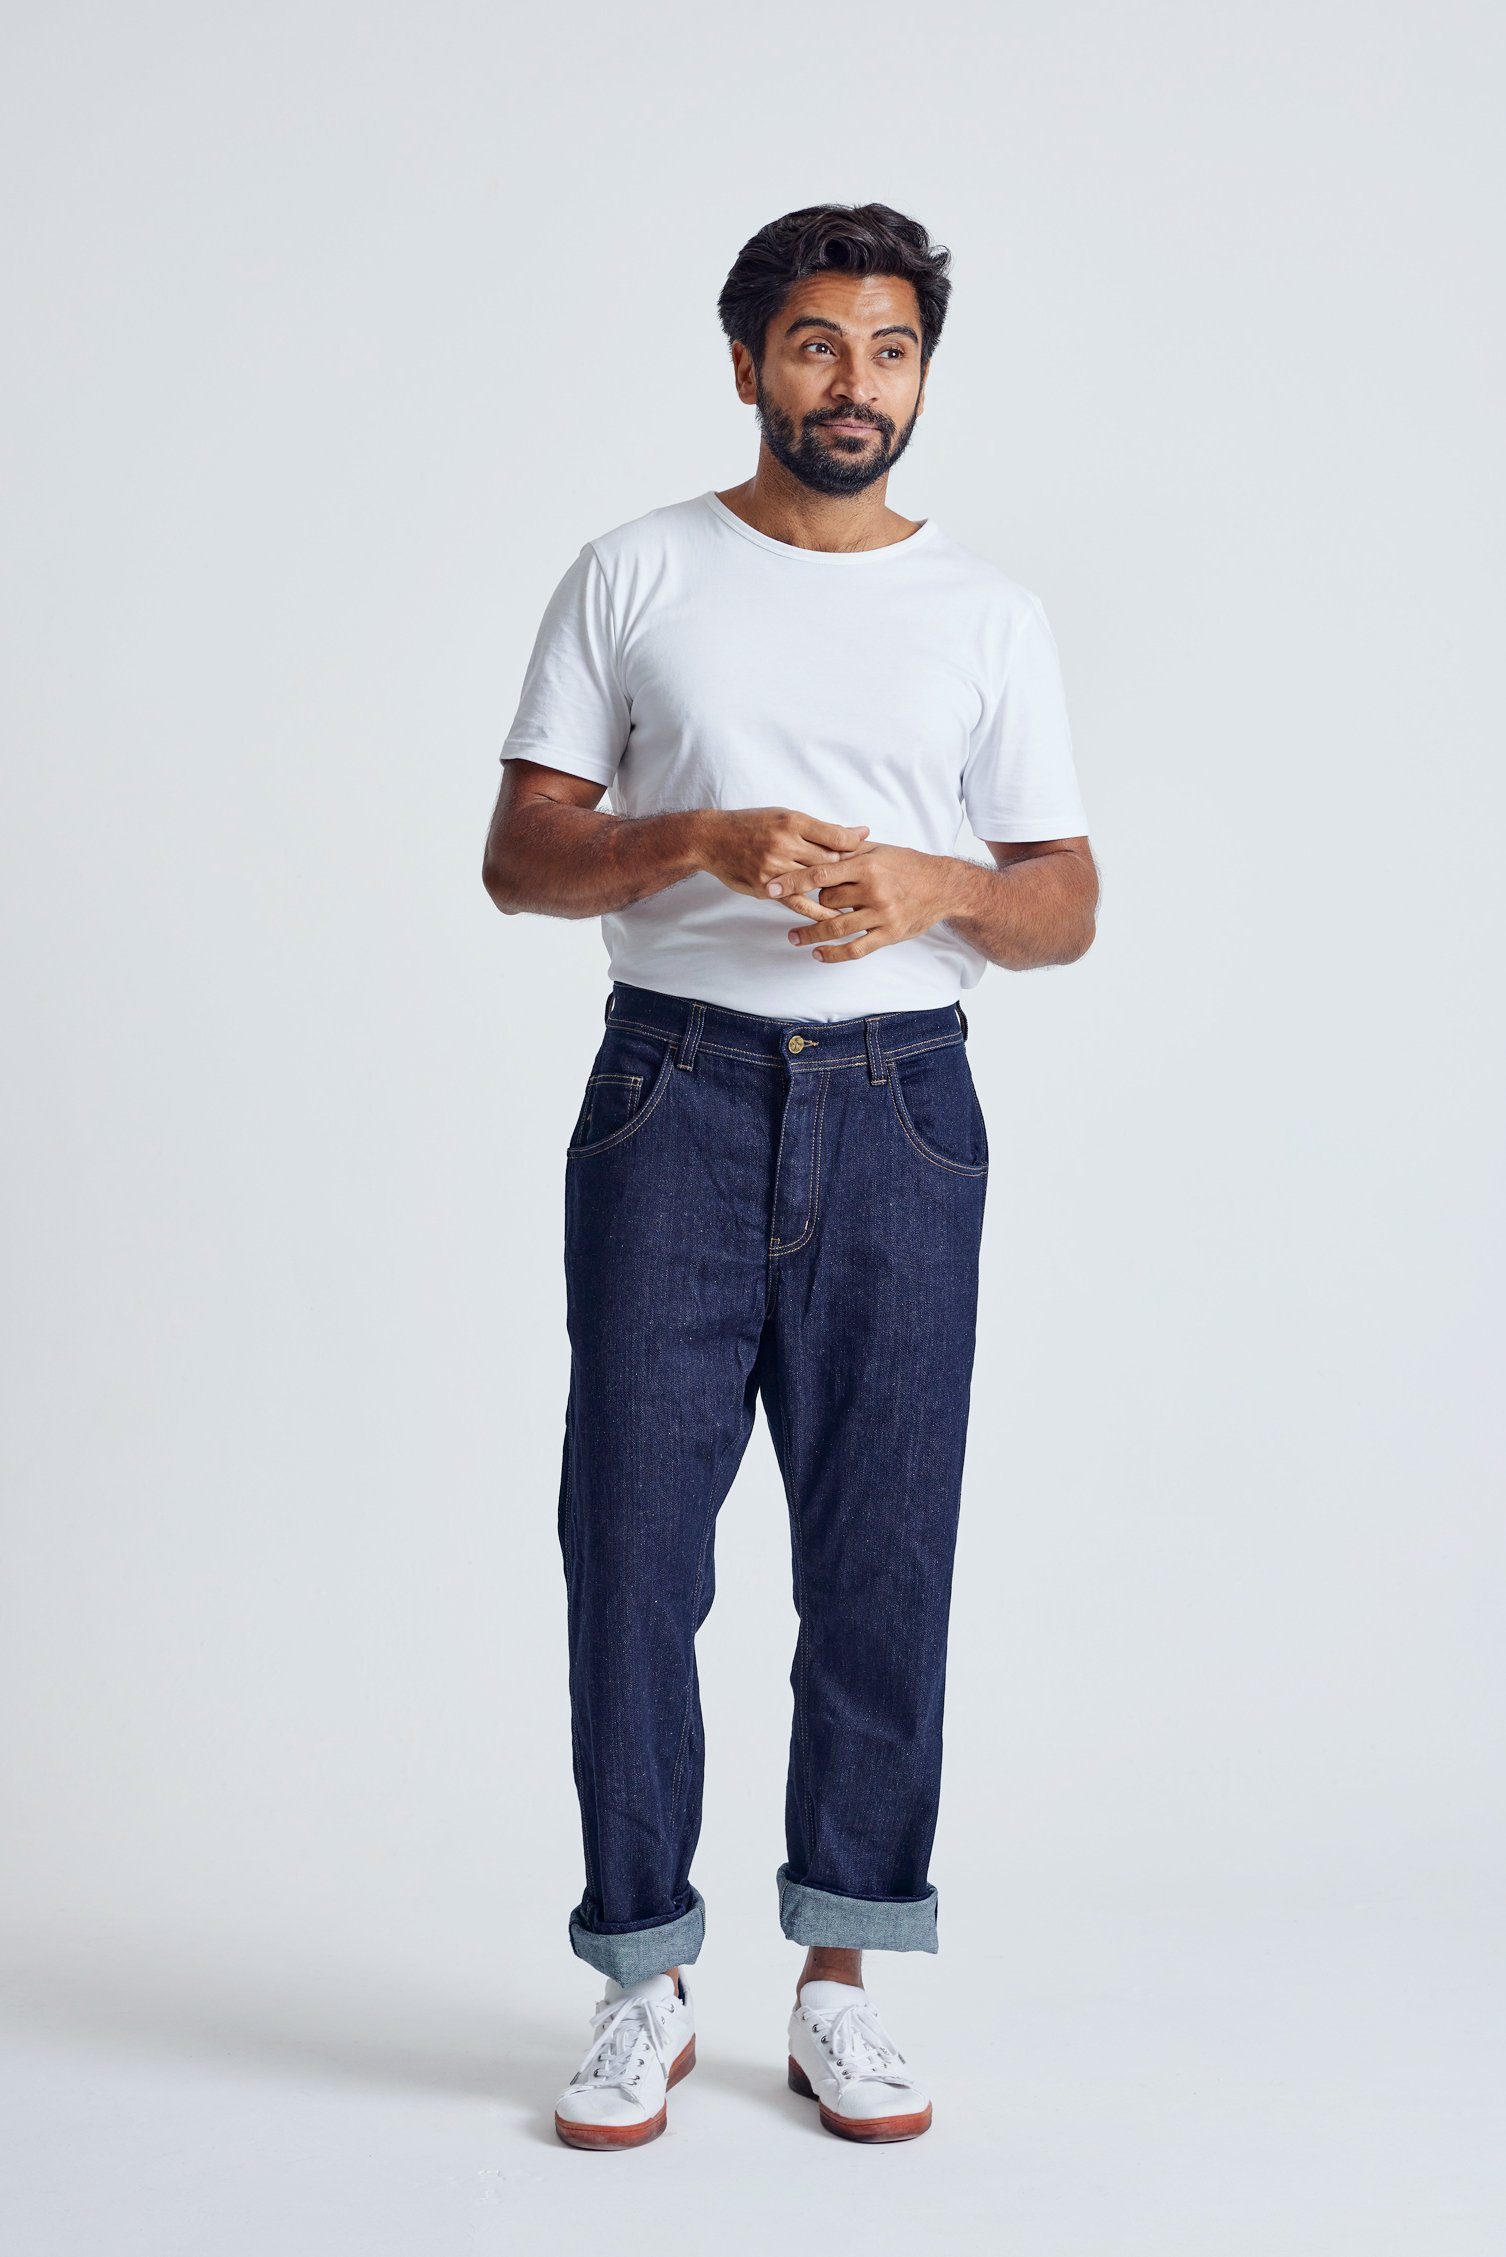 SATCH Rinse - GOTS Organic Cotton Jeans by Flax & Loom, 30 / Regular